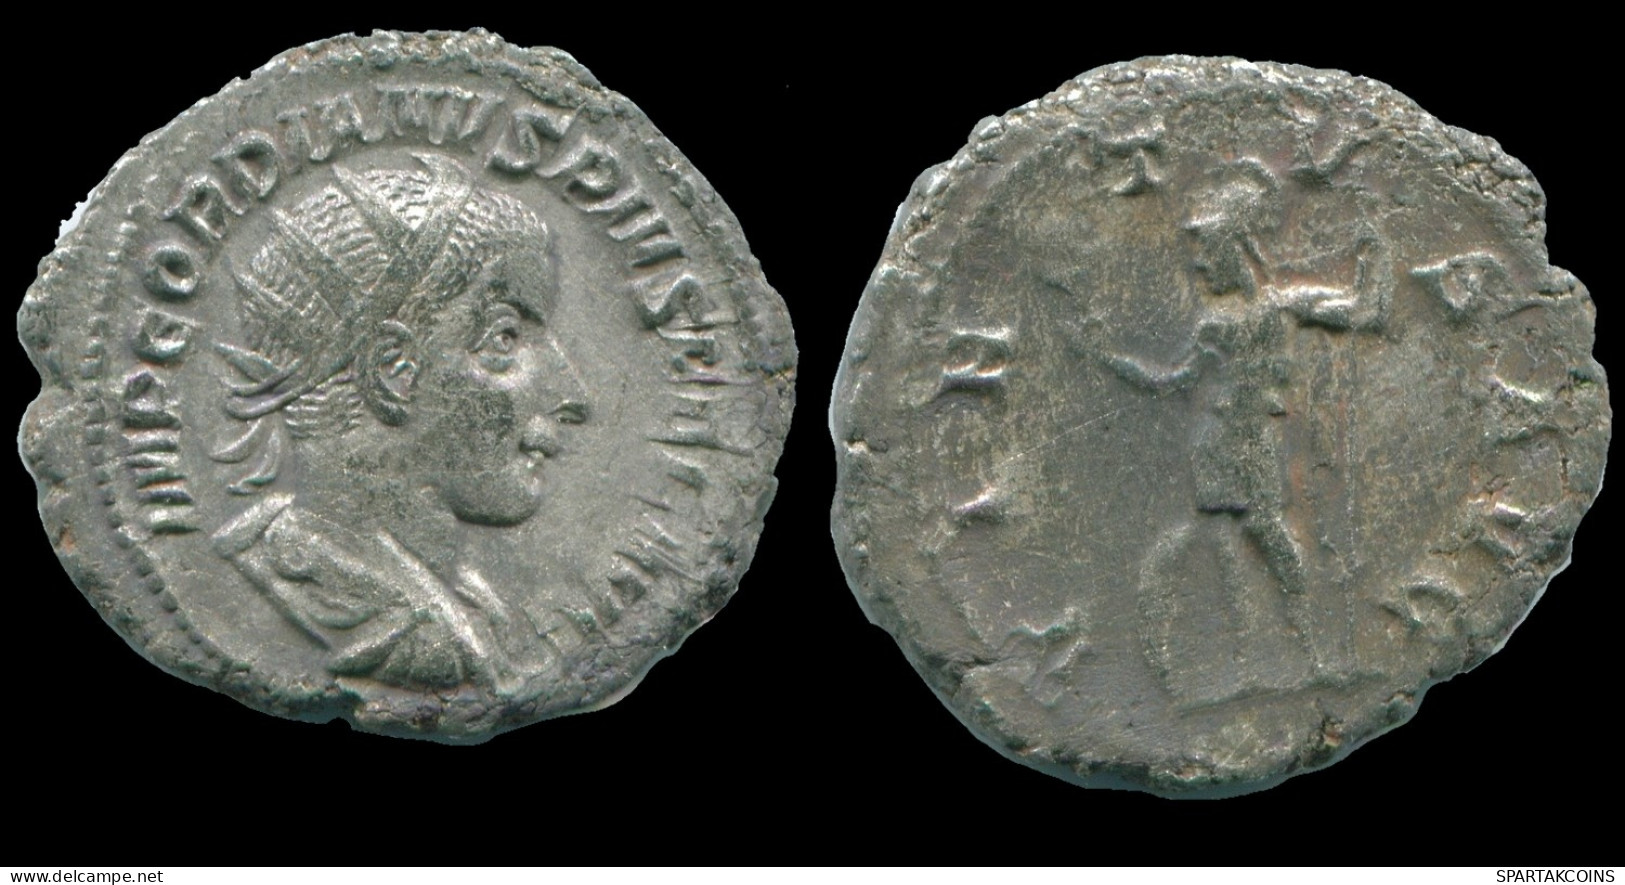 GORDIAN III AR ANTONINIANUS ROME AD 240 5TH OFFICINA VIRTVS AVG #ANC13134.38.U.A - The Military Crisis (235 AD To 284 AD)